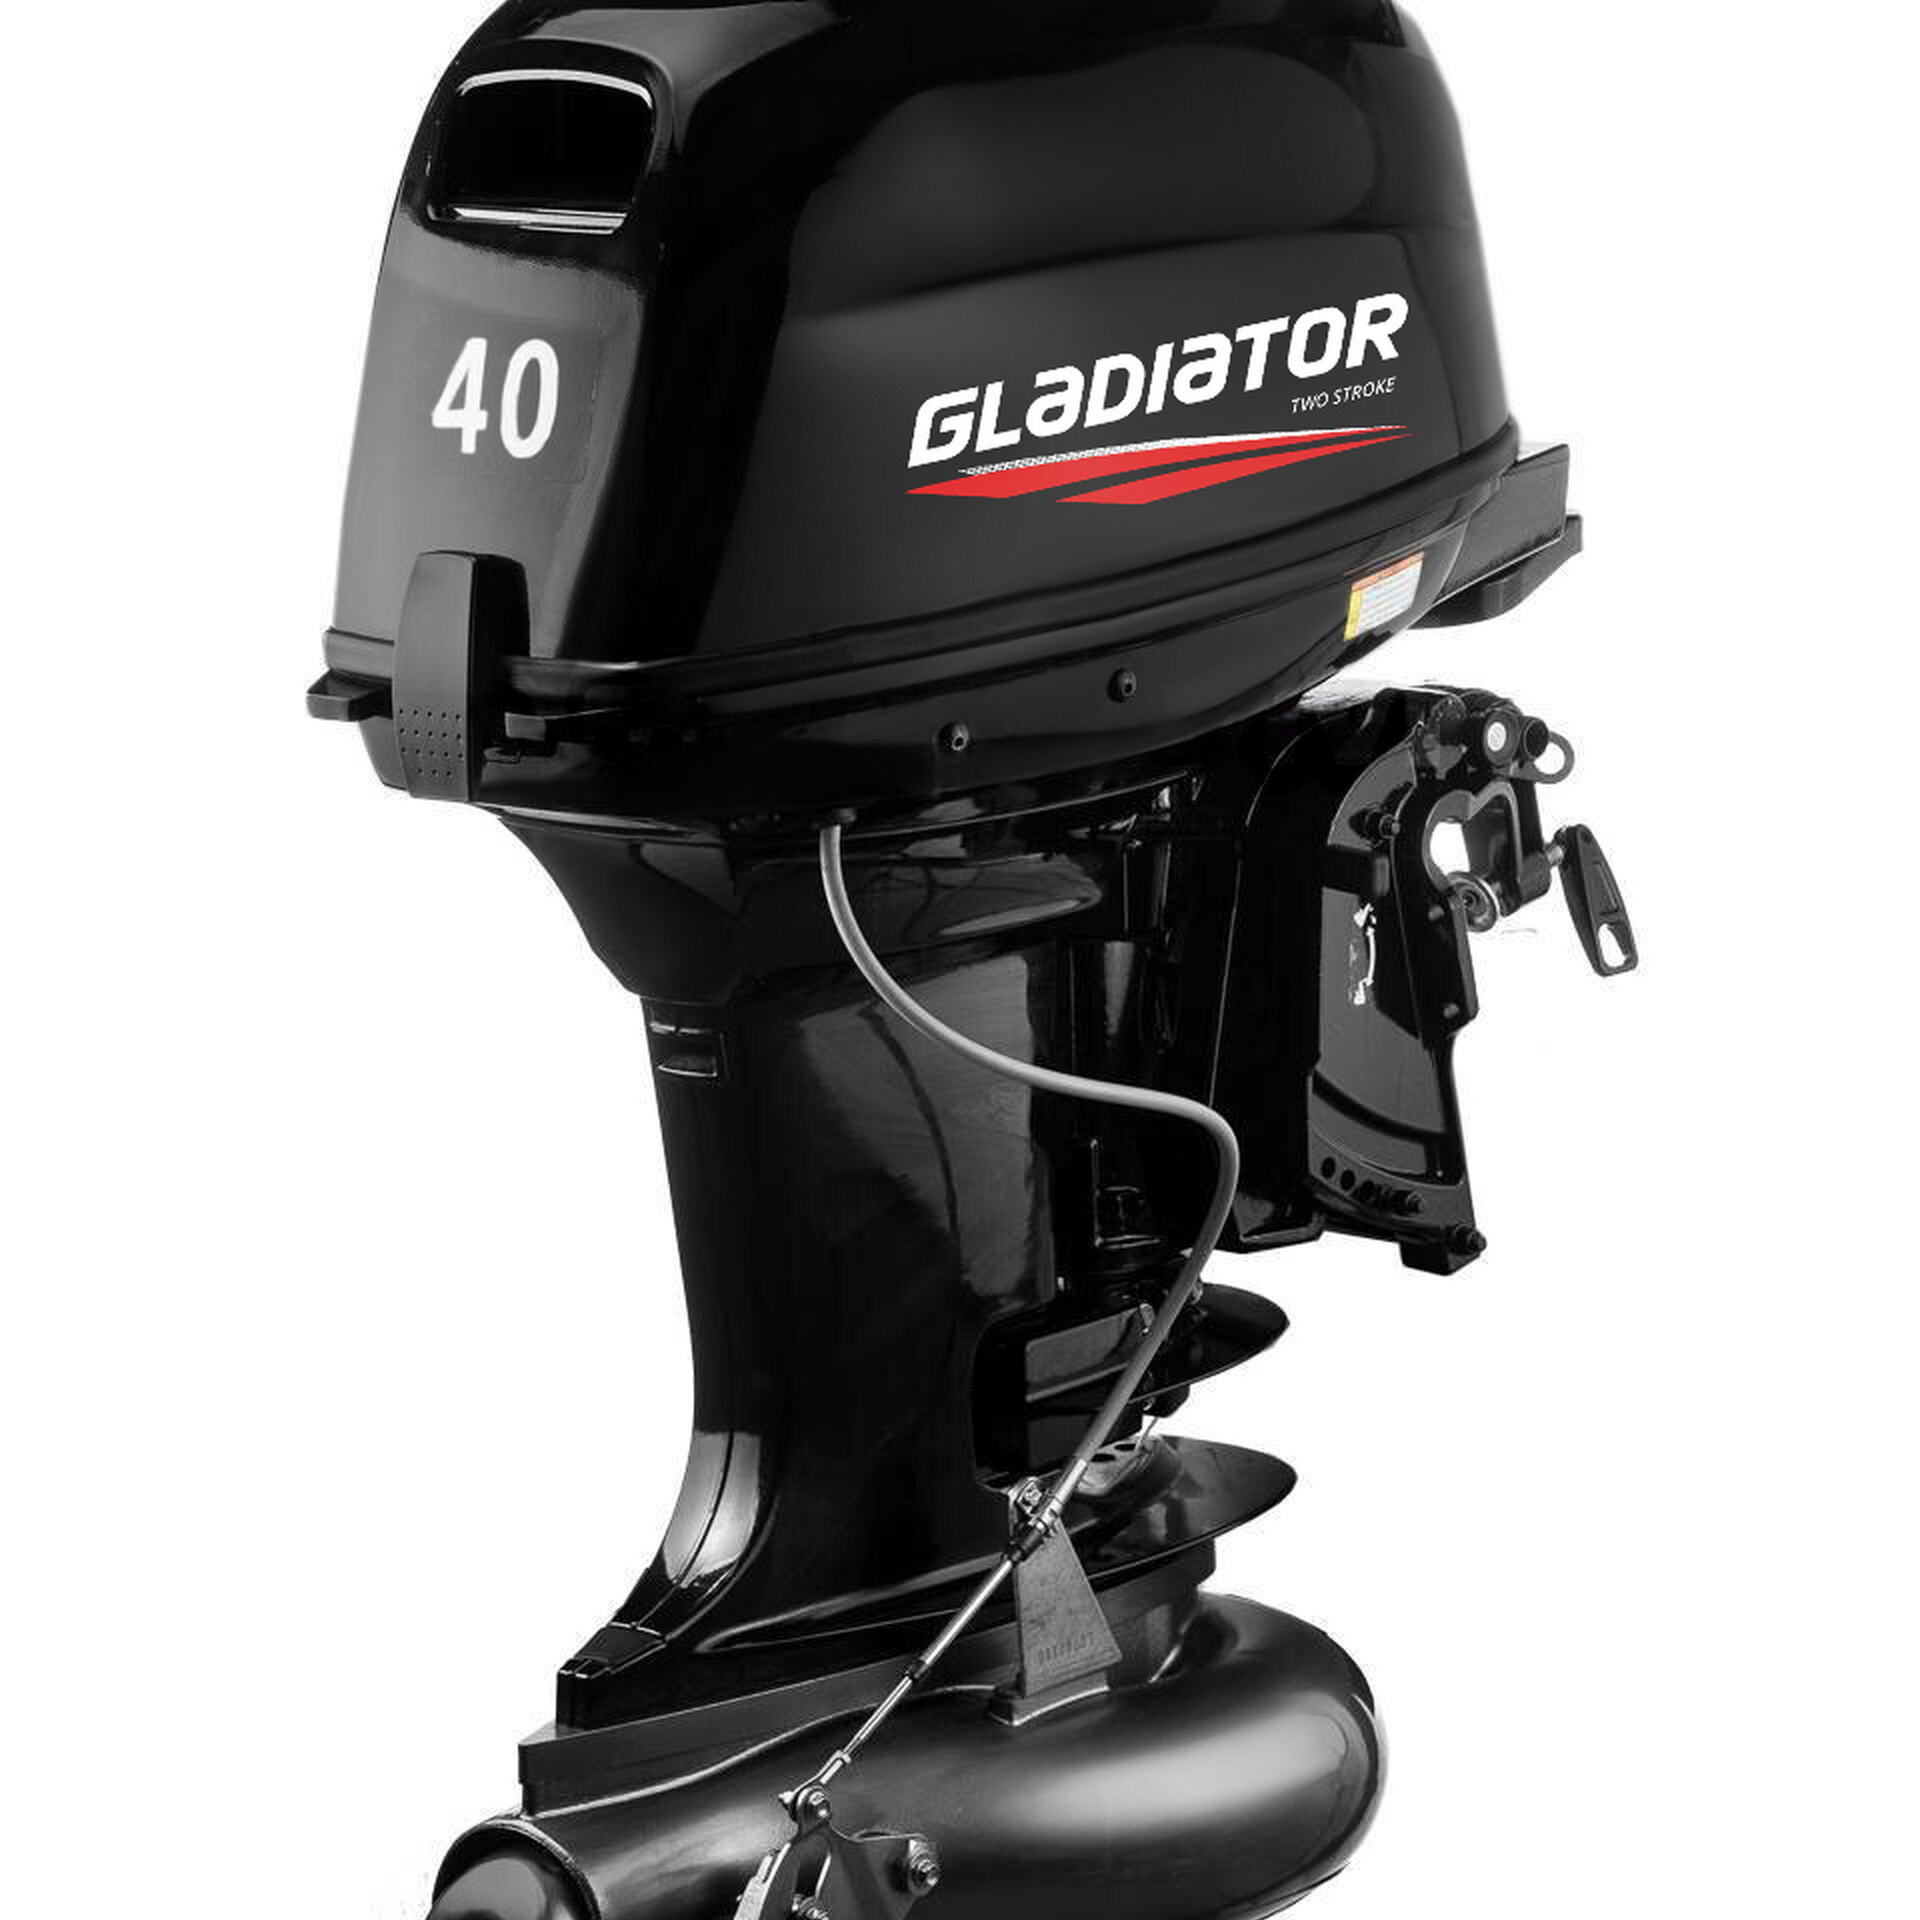 Мотор гладиатор видео. Мотор Gladiator g40fhs (водомет). Лодочный мотор Гладиатор 40 водомет. Лодочный мотор Gladiator g9.9fhs водомет. Gladiator g40fh (водомет) производитель.